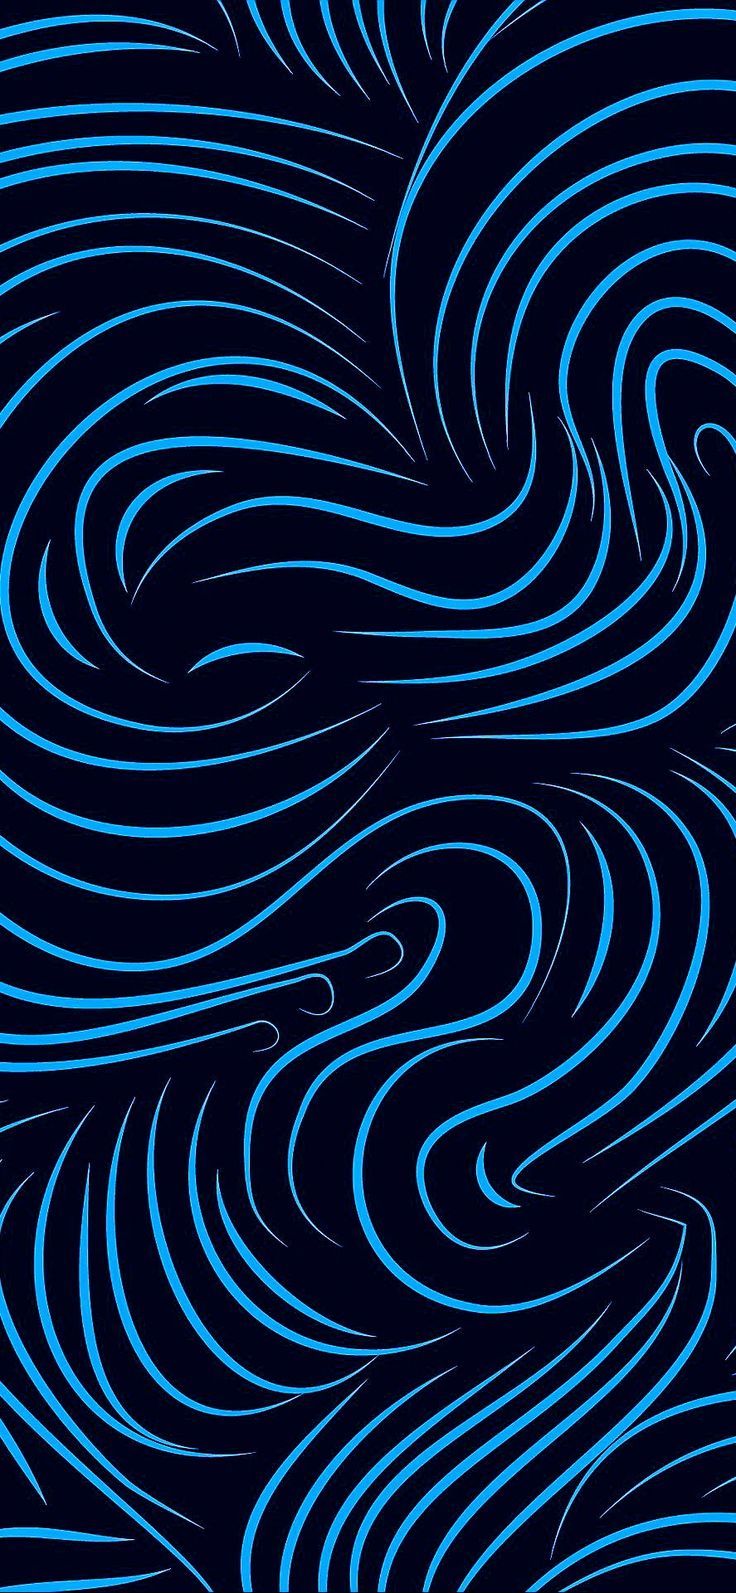  Coole 3D Hintergrundbild 736x1593. abstract #illusion D #digitalart #art #design #artwork #lines #stains #structure #. Blue background wallpaper, Butterfly wallpaper iphone, Abstract wallpaper